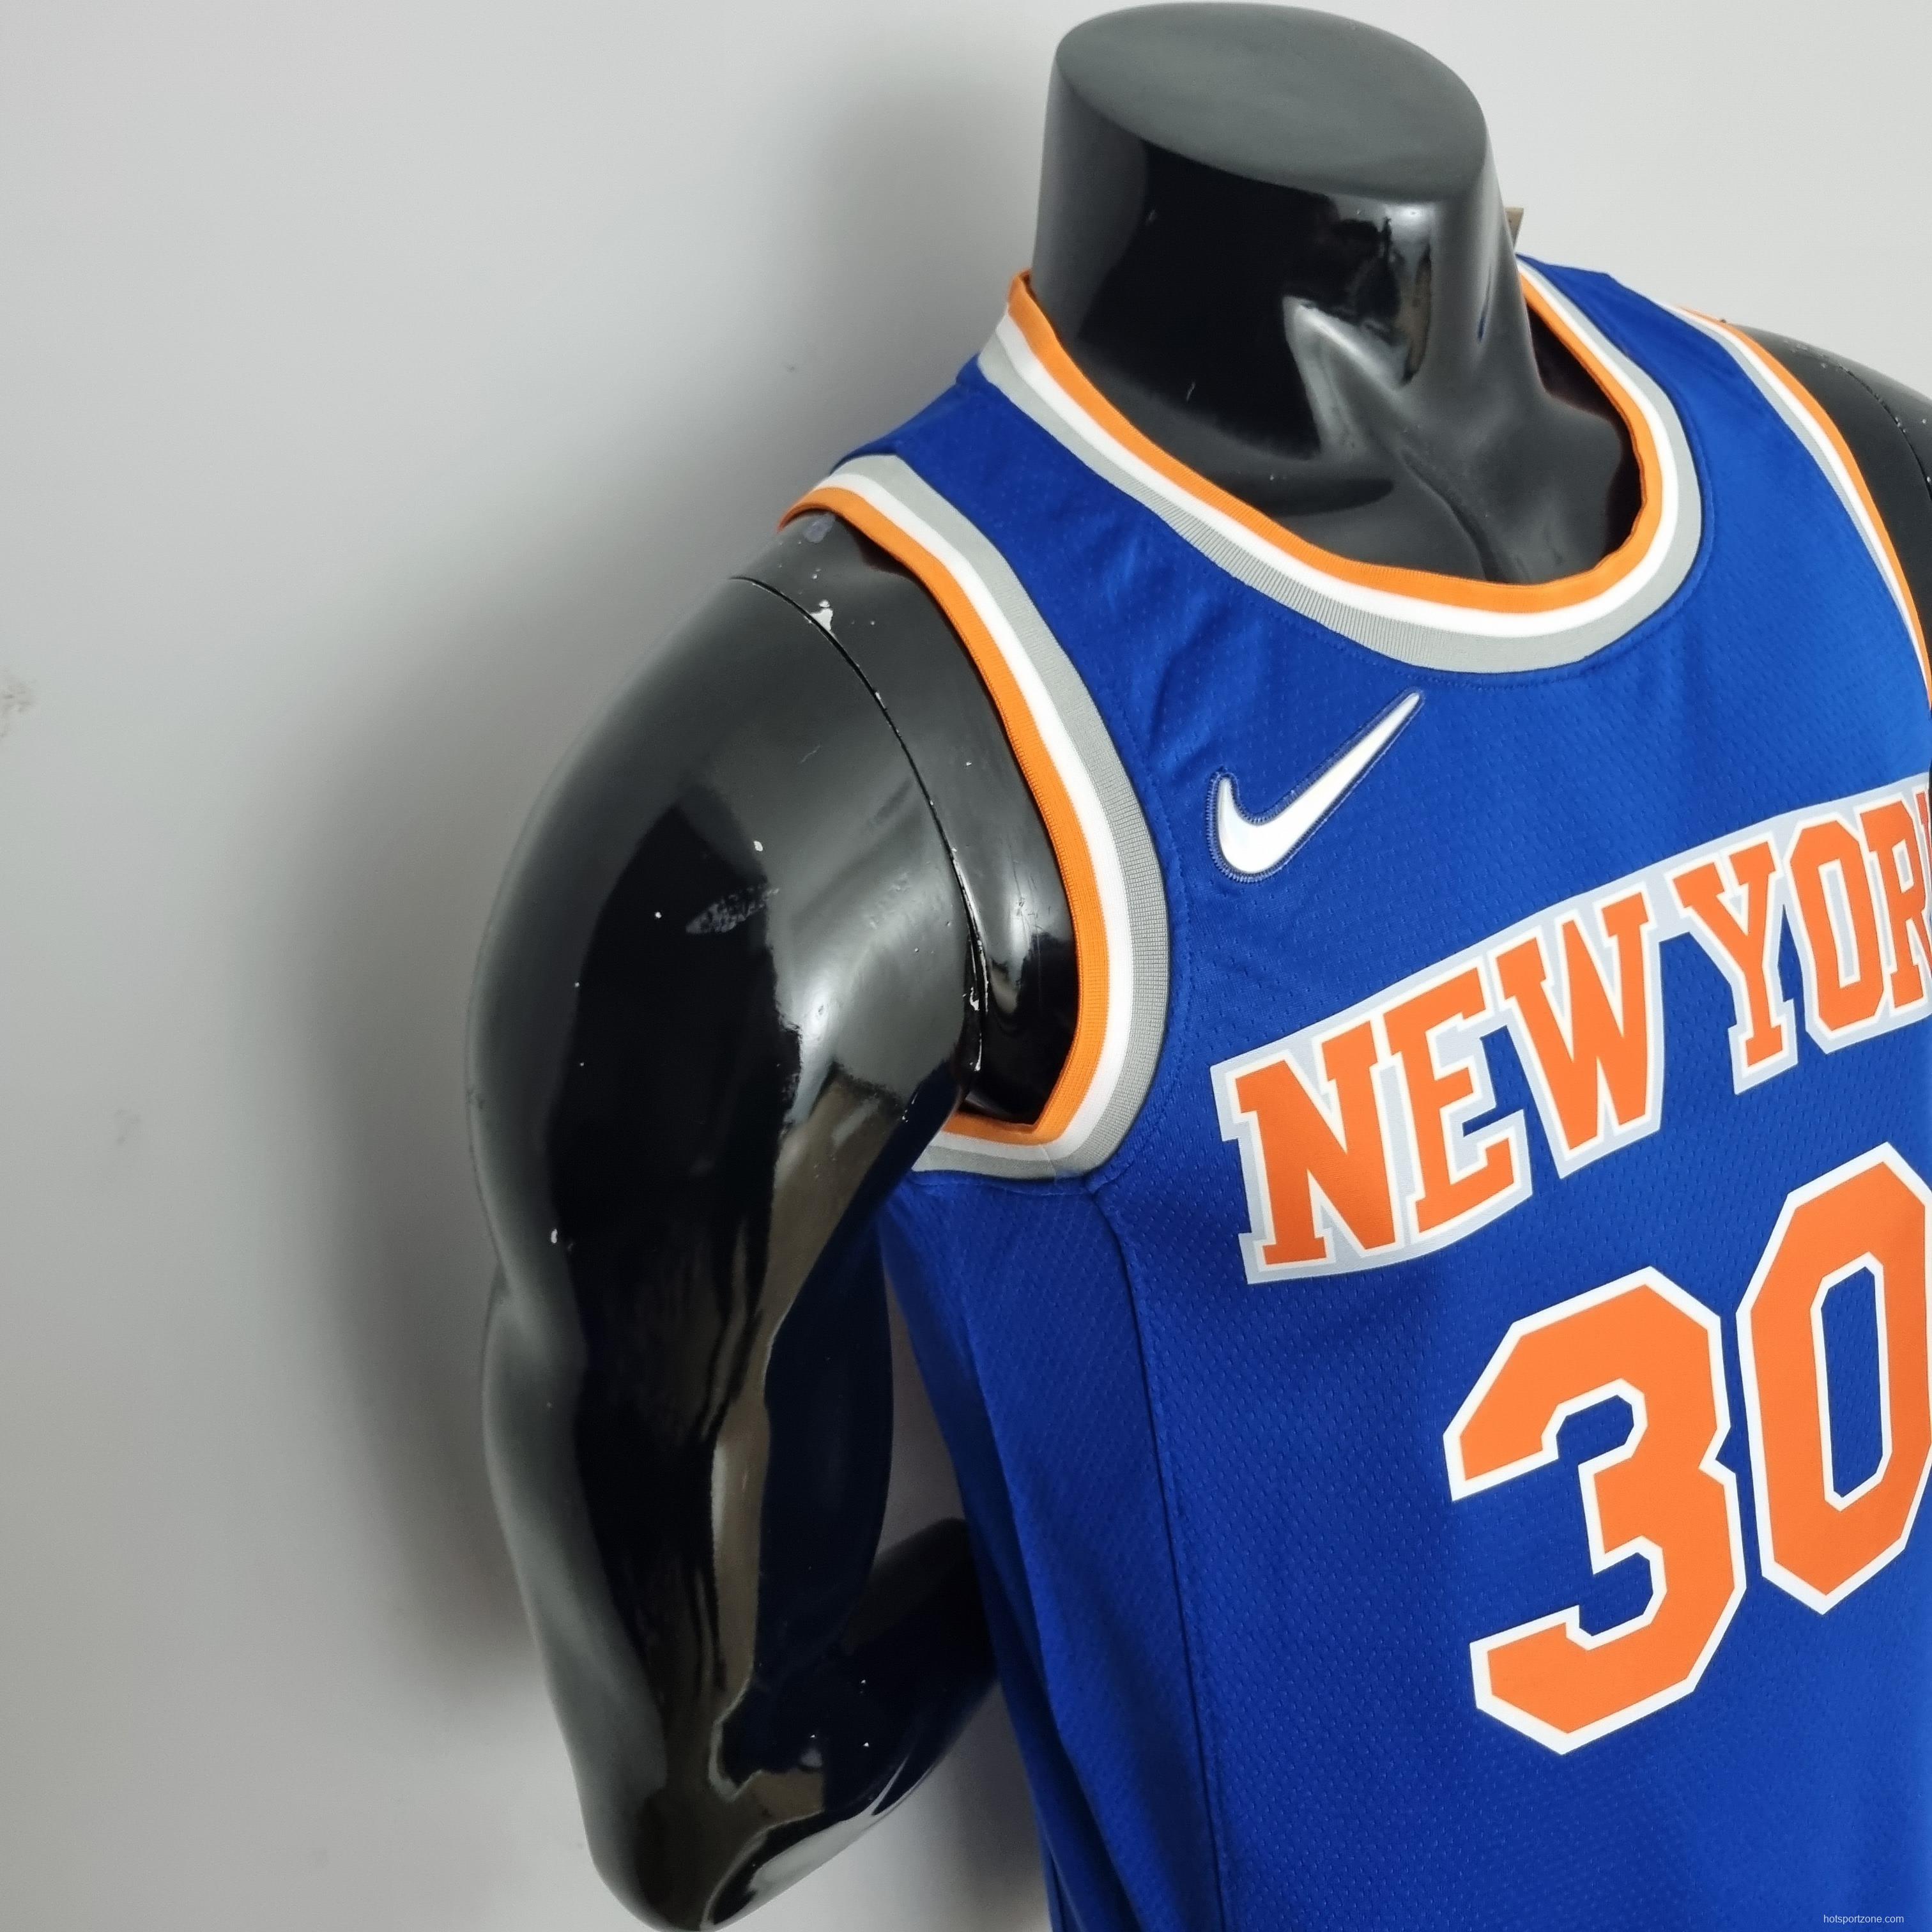 75th Anniversary Randle #30 New York Knicks Blue NBA Jersey